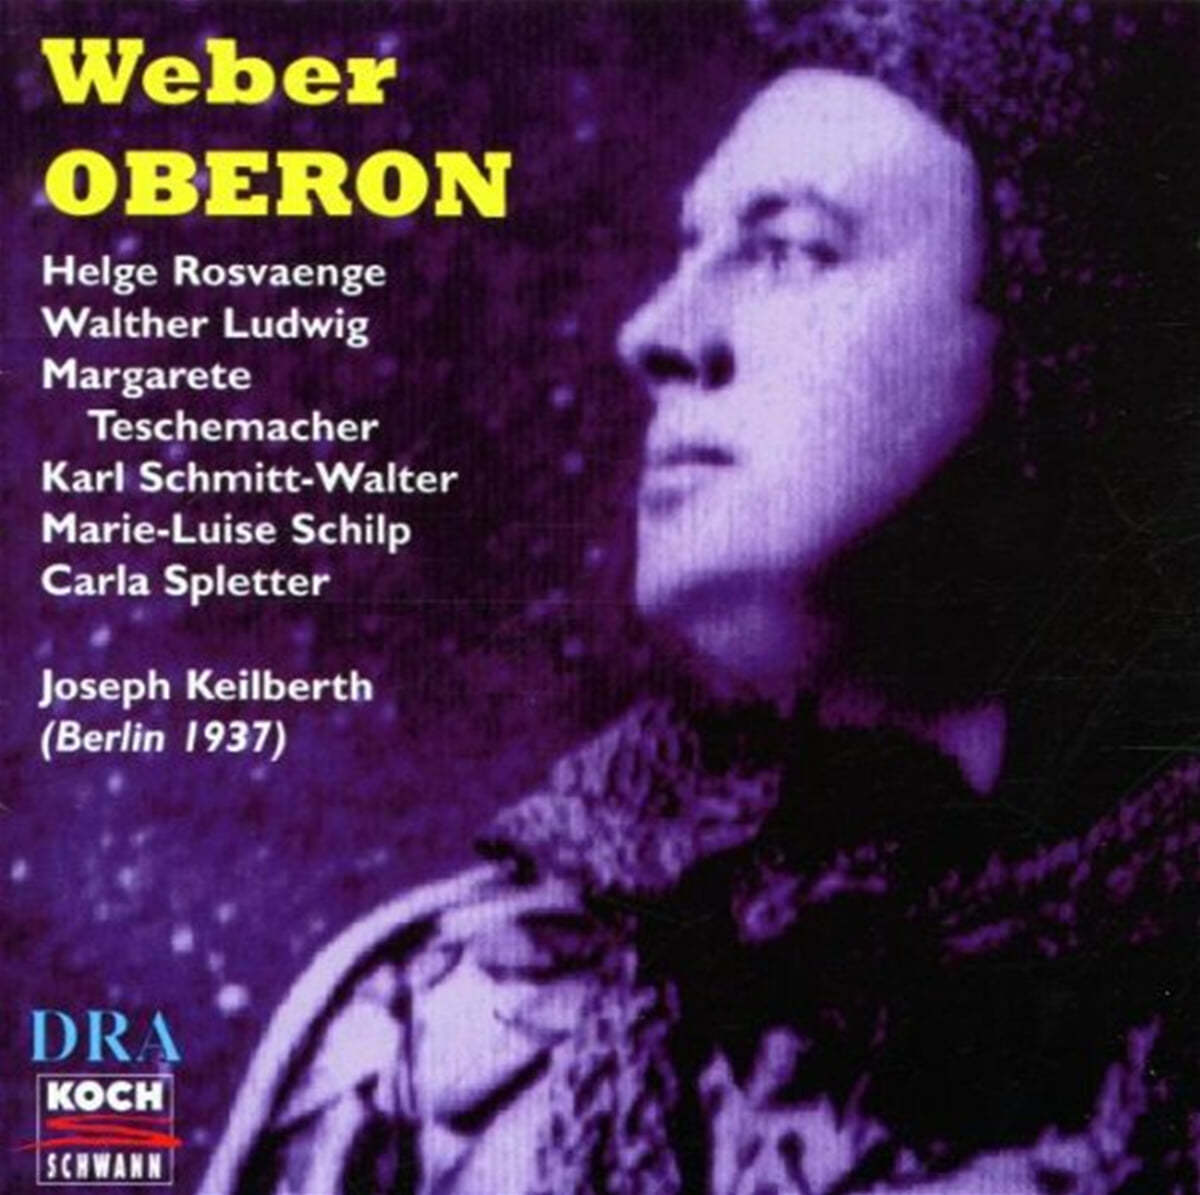 Joseph Keilberth 베버: 오페라 '오베른' (Weber: Oberon) 